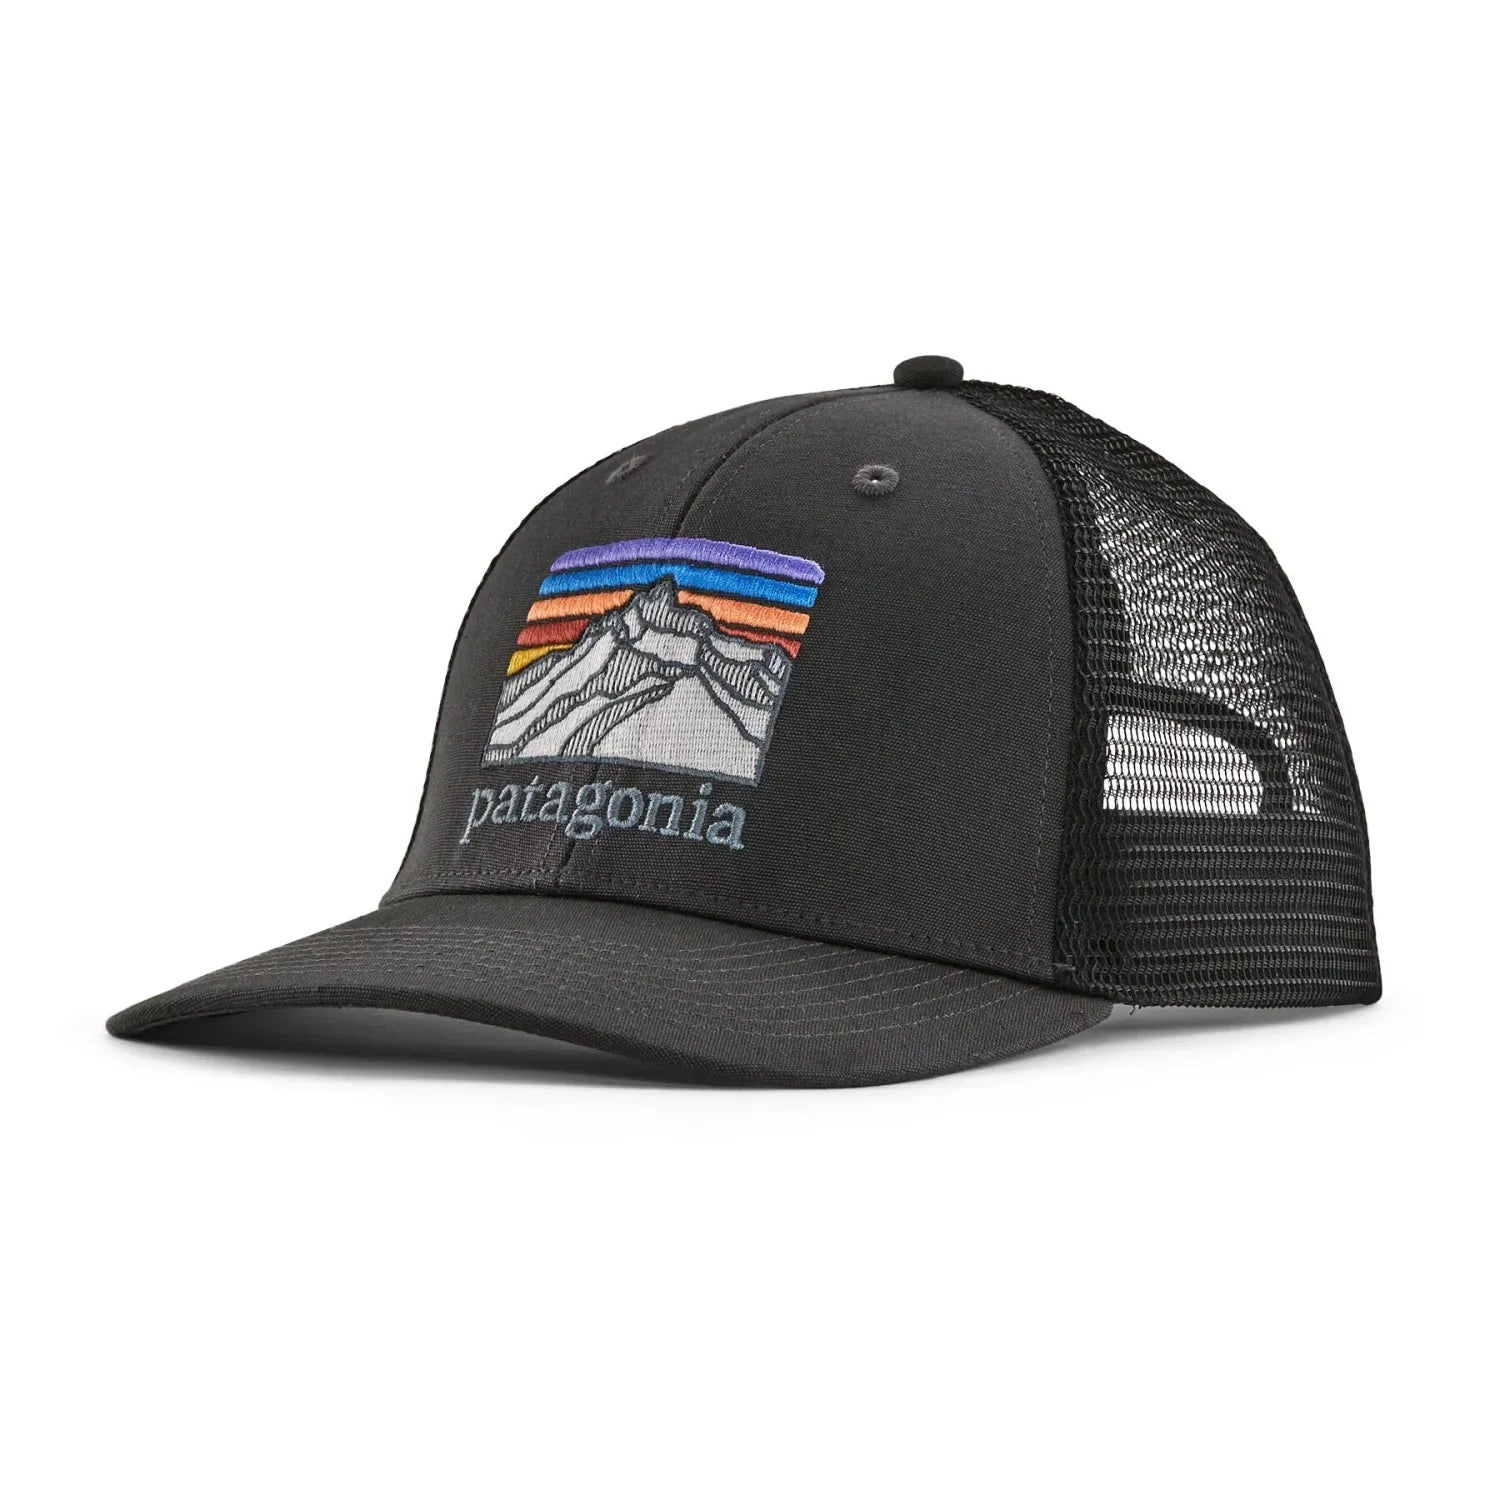 Patagonia HATS - HATS BILLED - HATS BILLED Line Logo Ridge LoPro Trucker Hat INBK INK BLACK